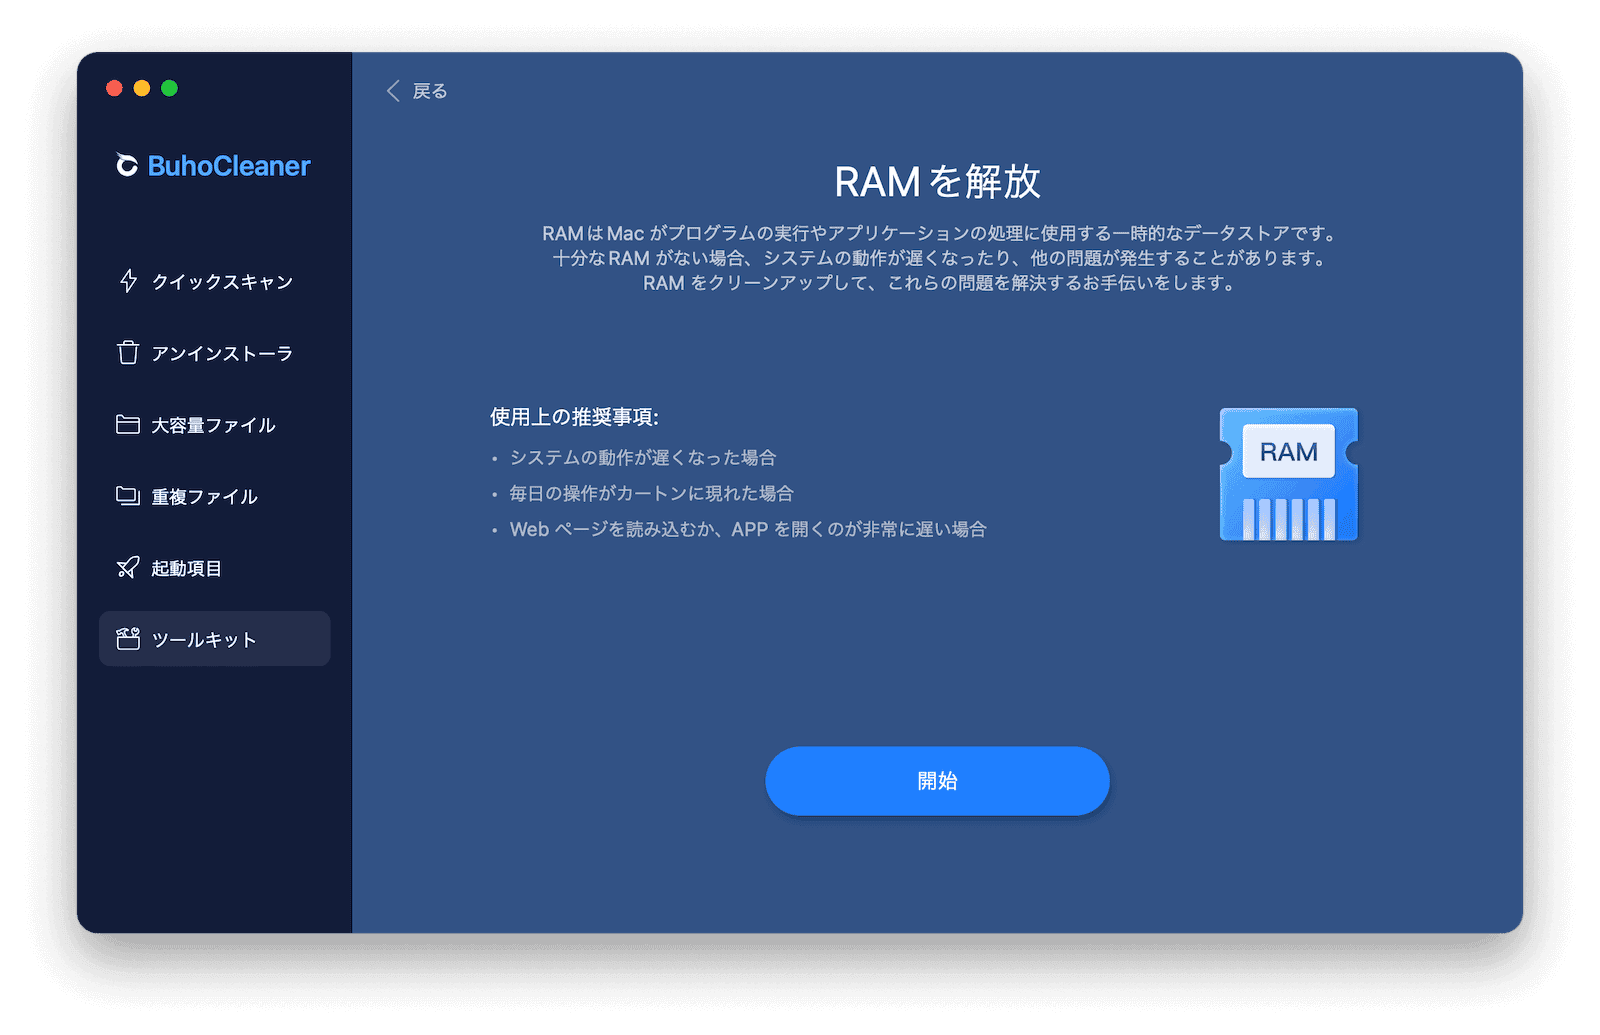 BuhoCleaner で RAM を解放する